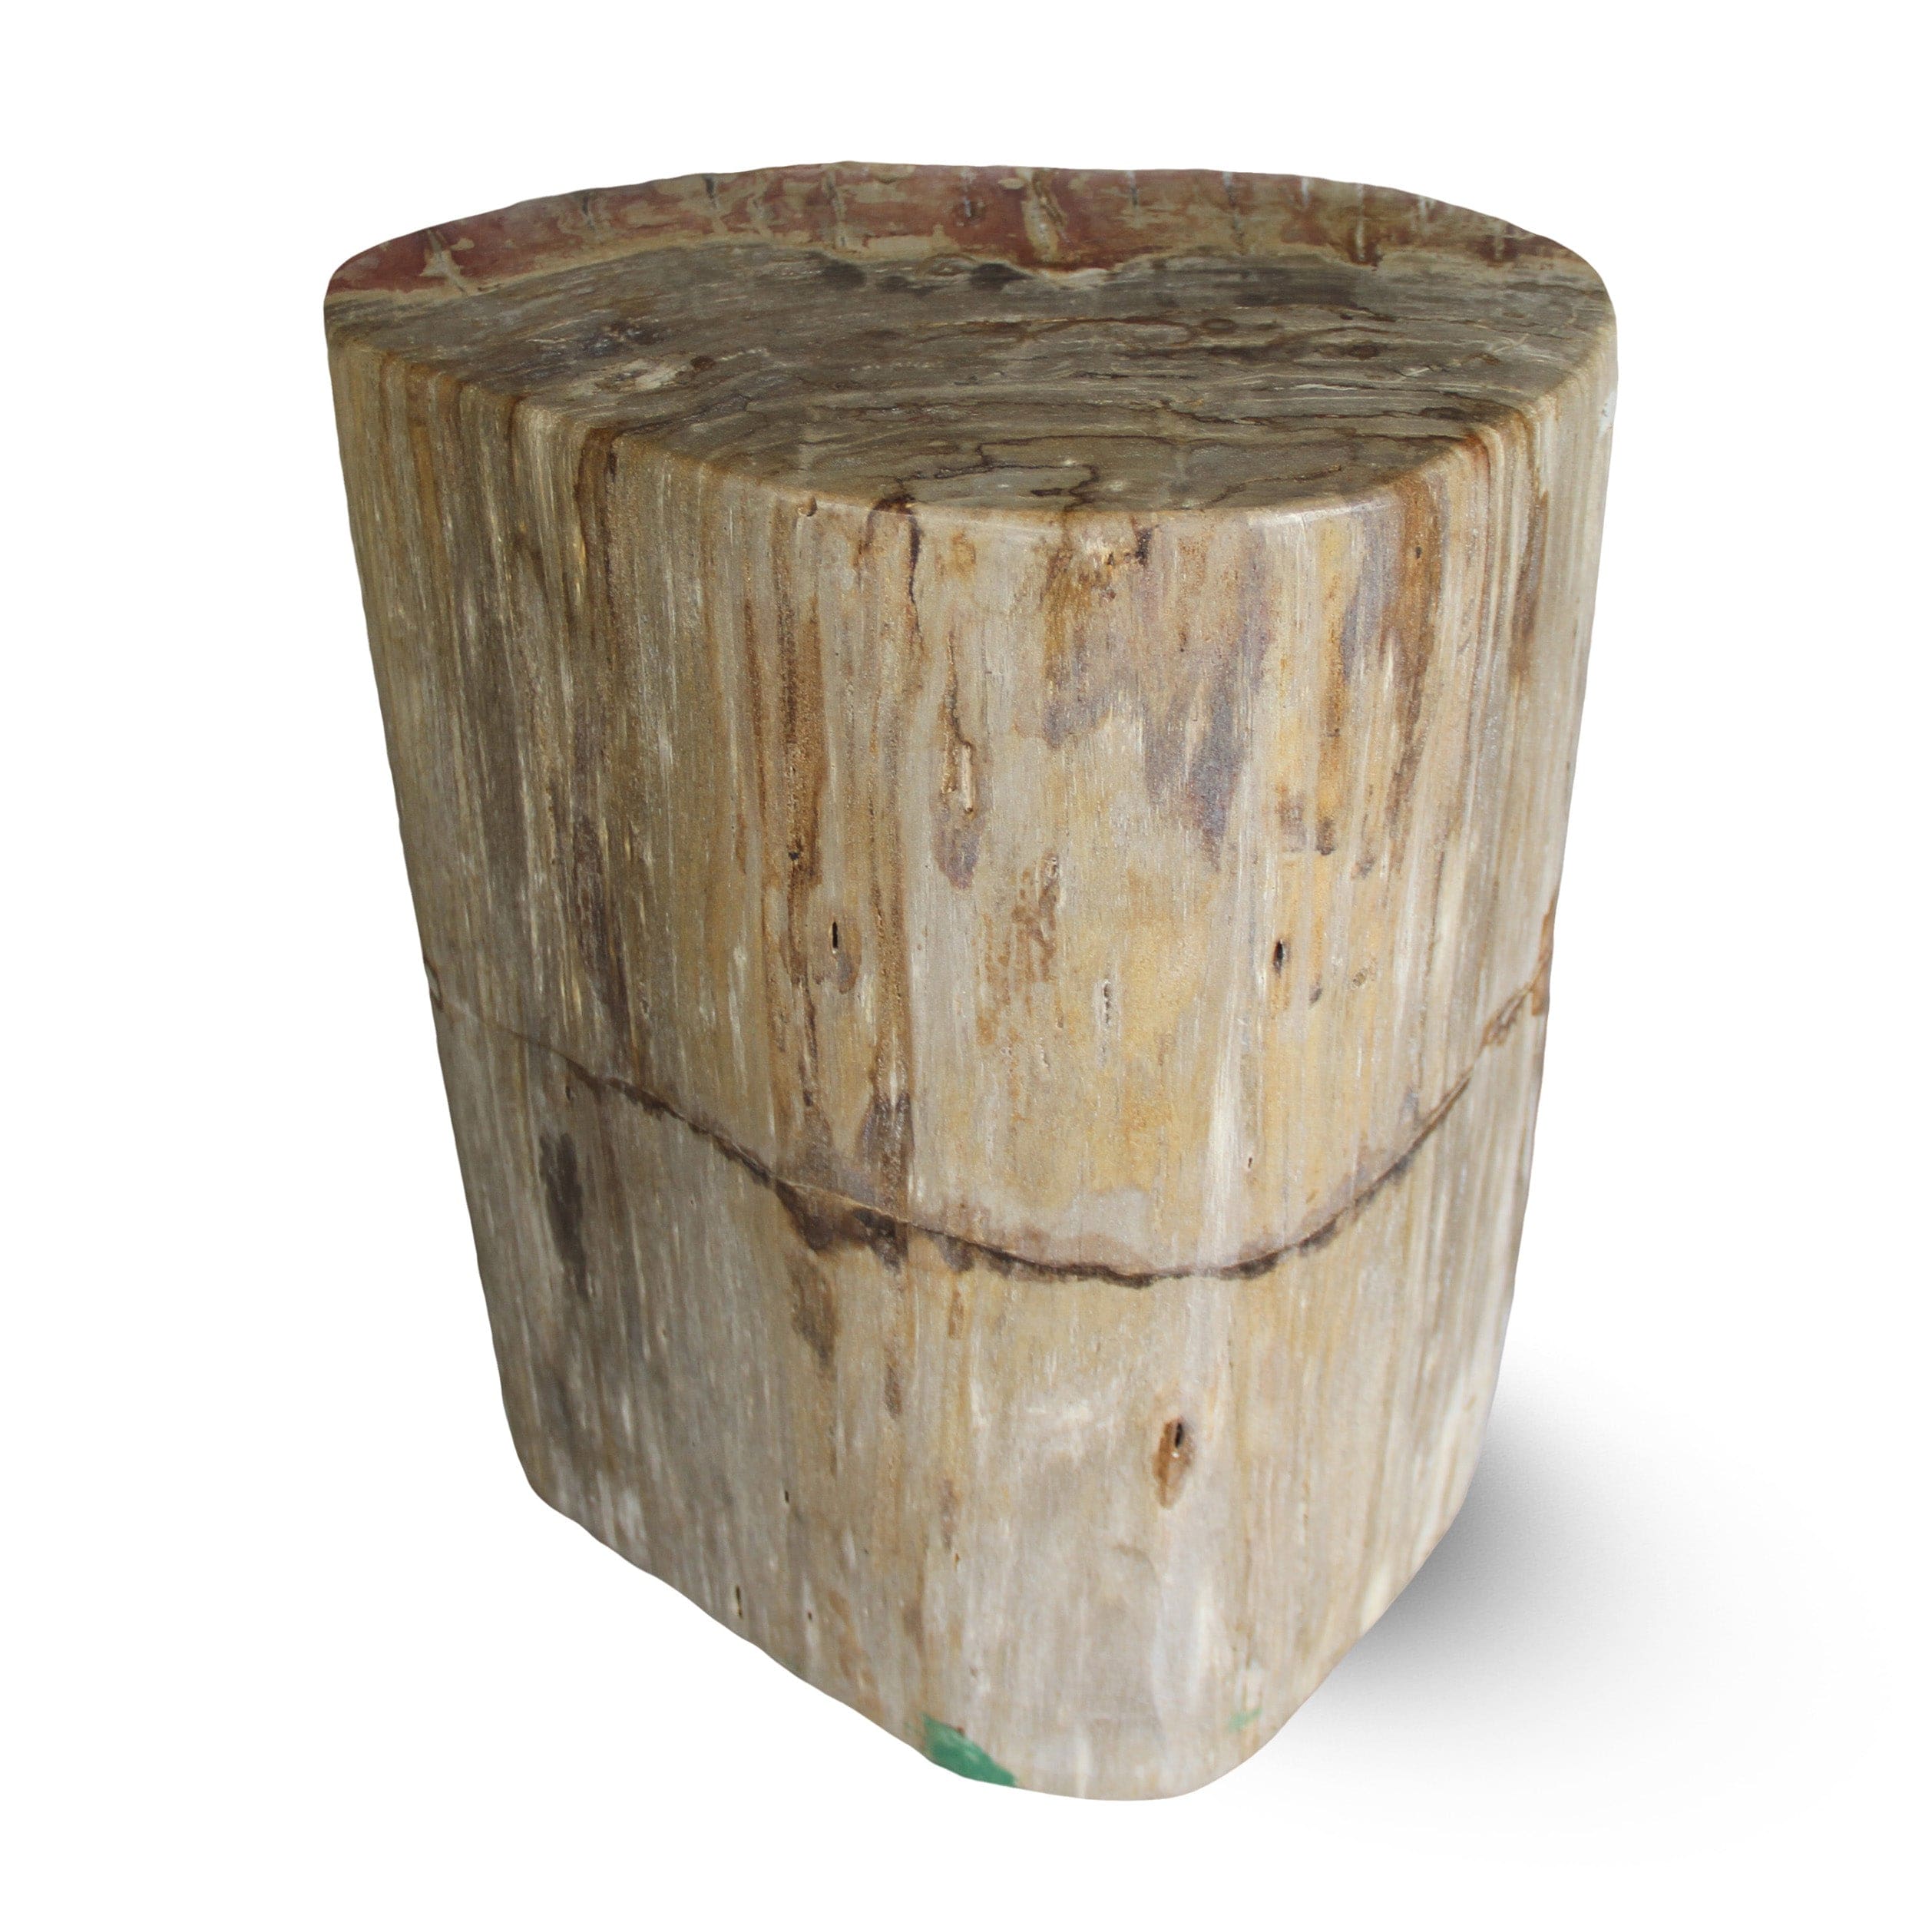 Kalifano Petrified Wood Petrified Wood Round Stump / Stool from Indonesia - 16" / 134 lbs PWS2600.005